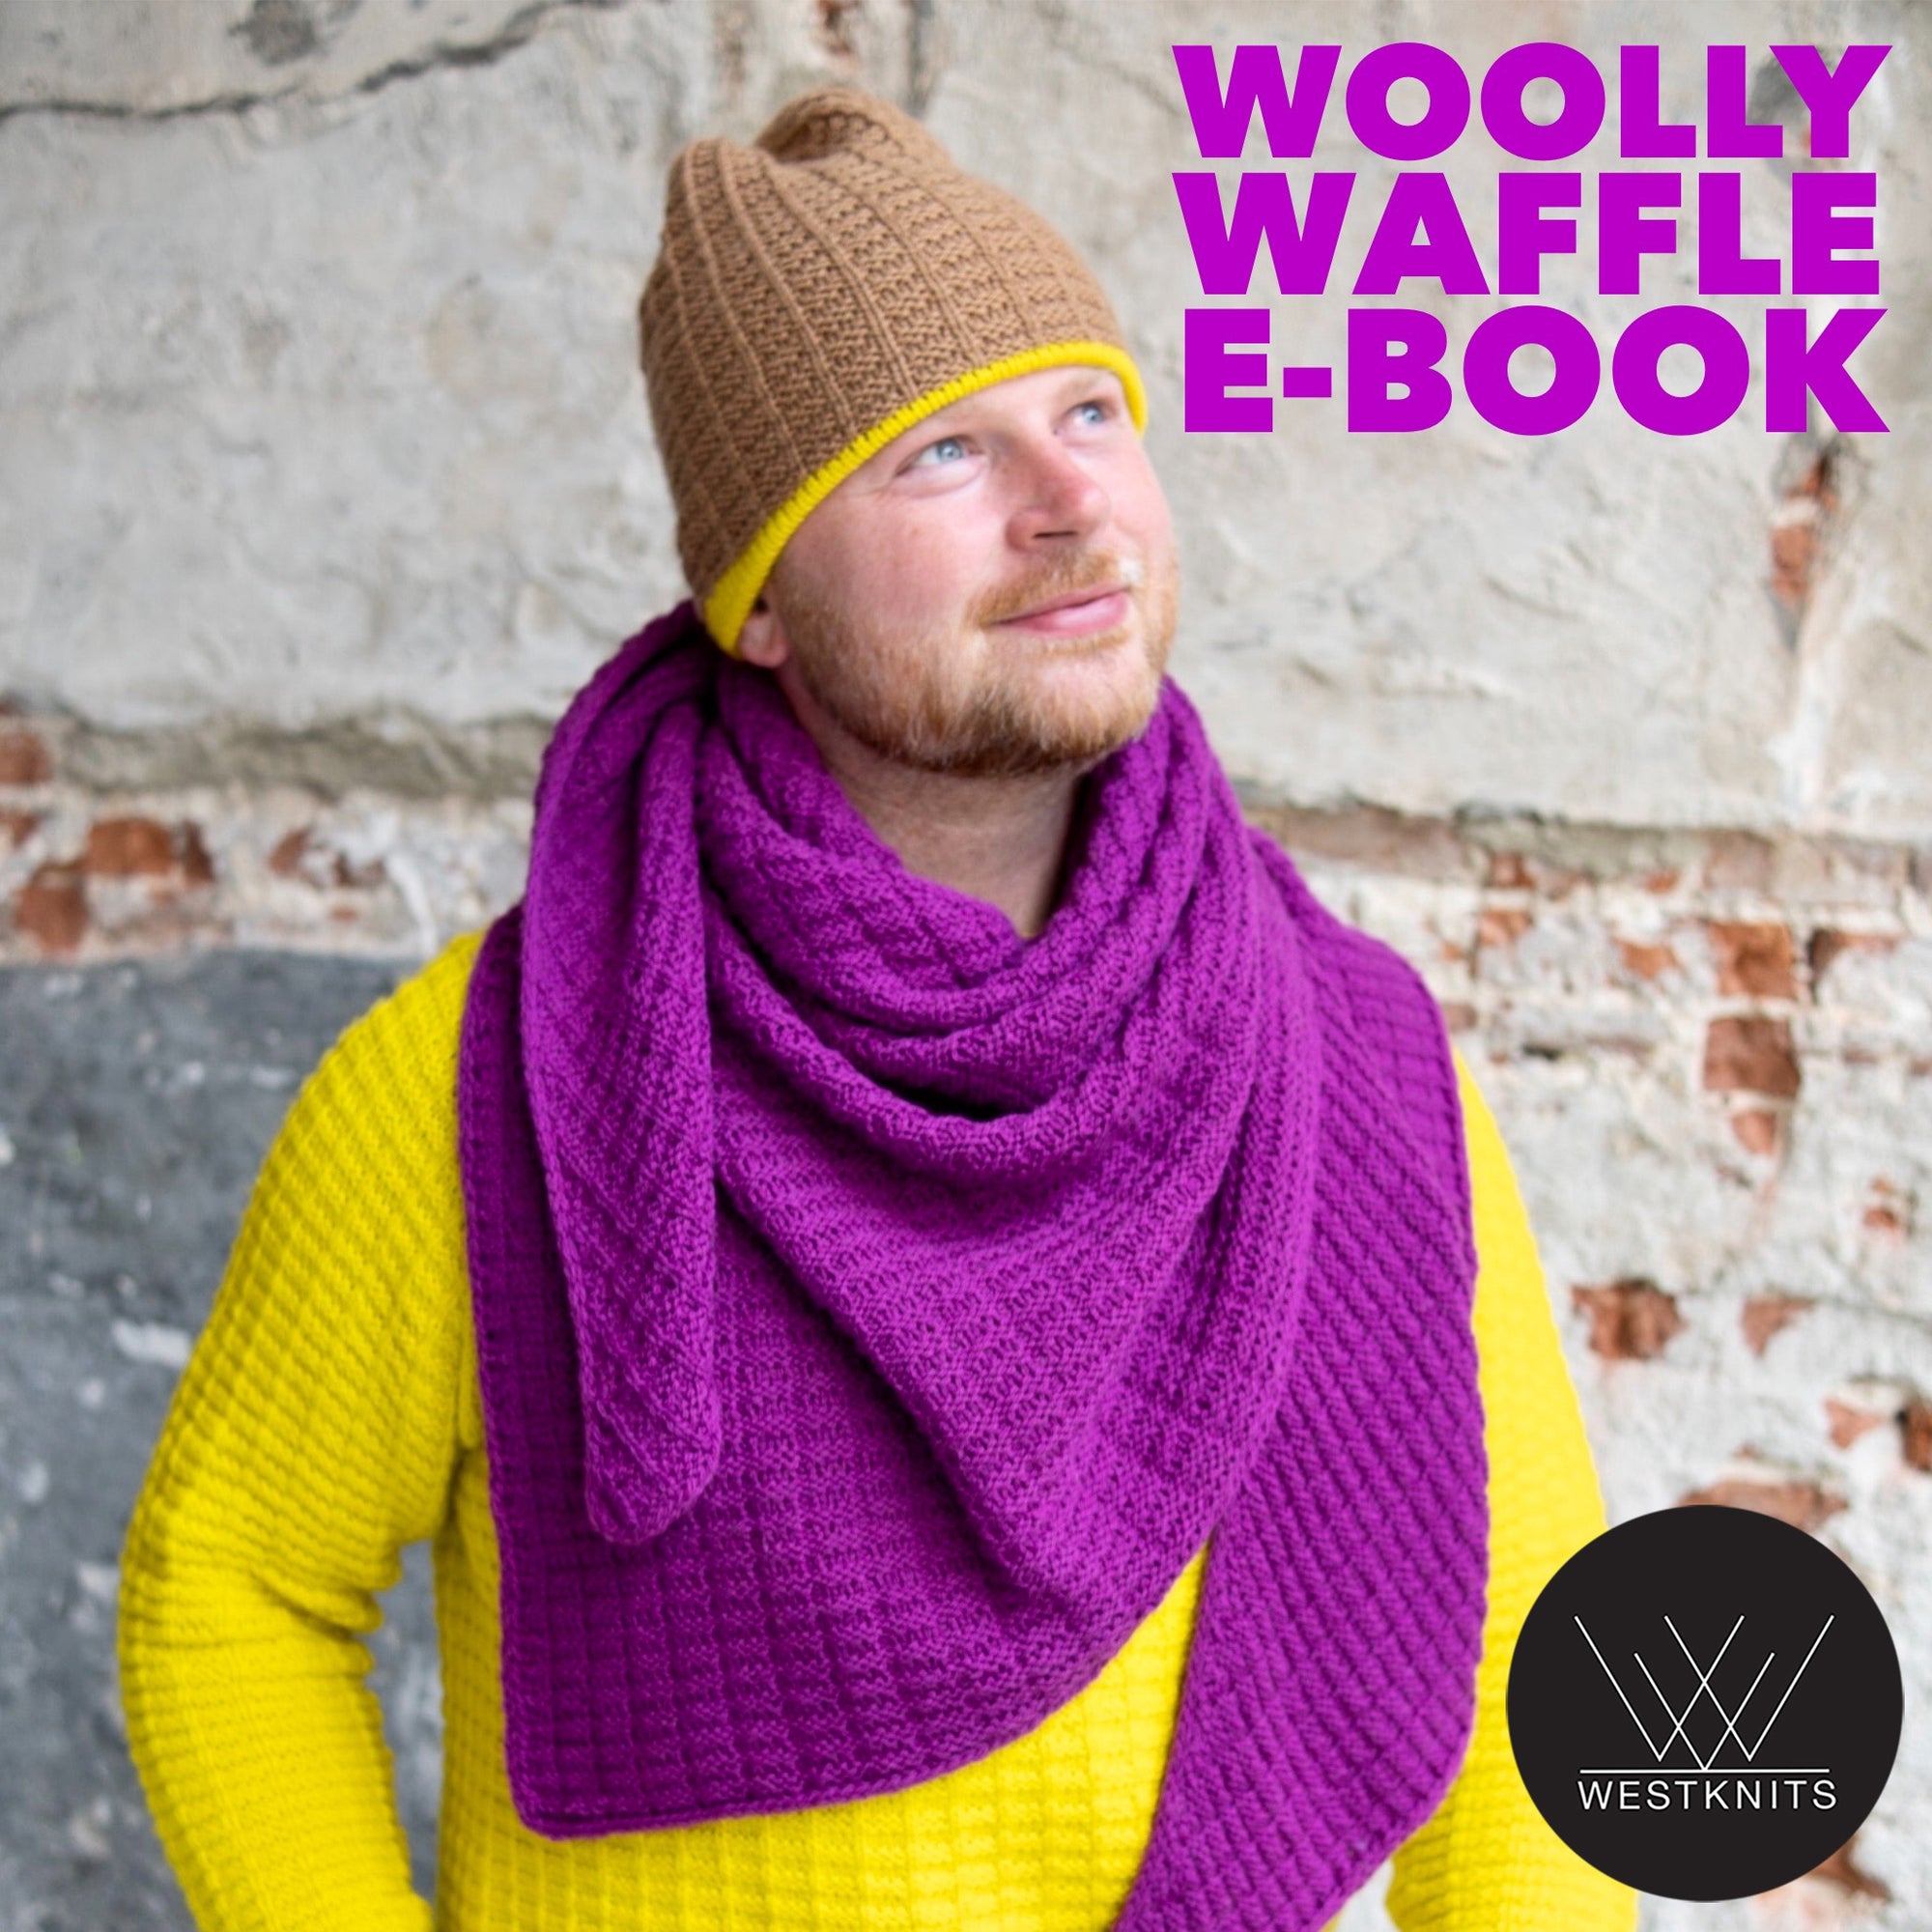 Woolly Waffle E-book